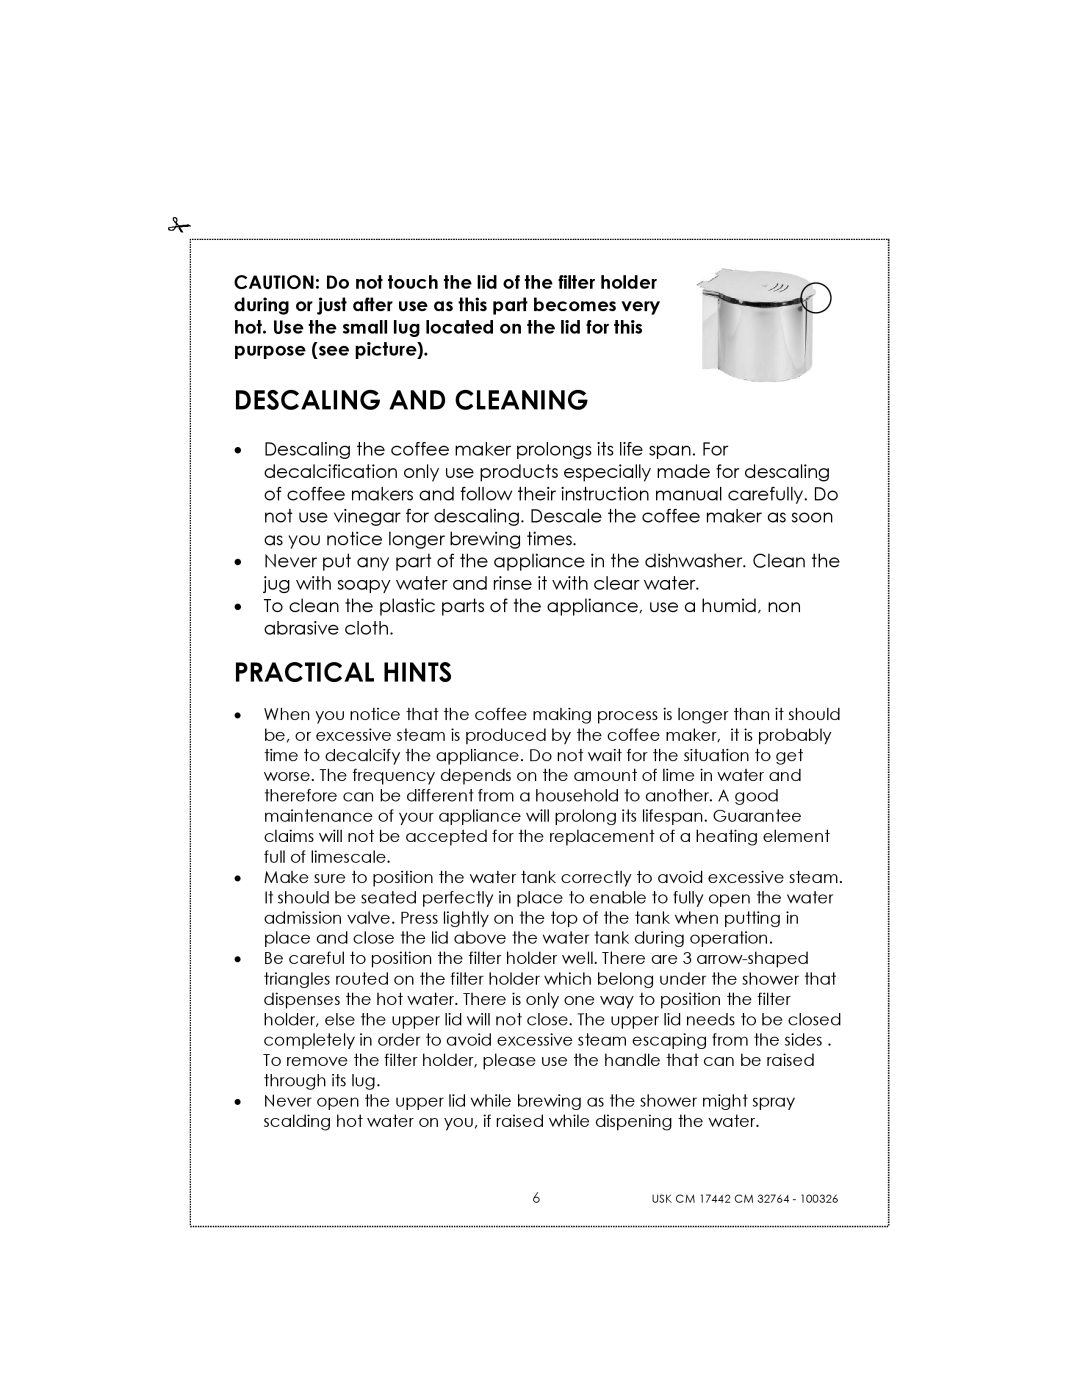 Kalorik USK CM 32764 manual Descaling And Cleaning, Practical Hints, USK CM 17442 CM 